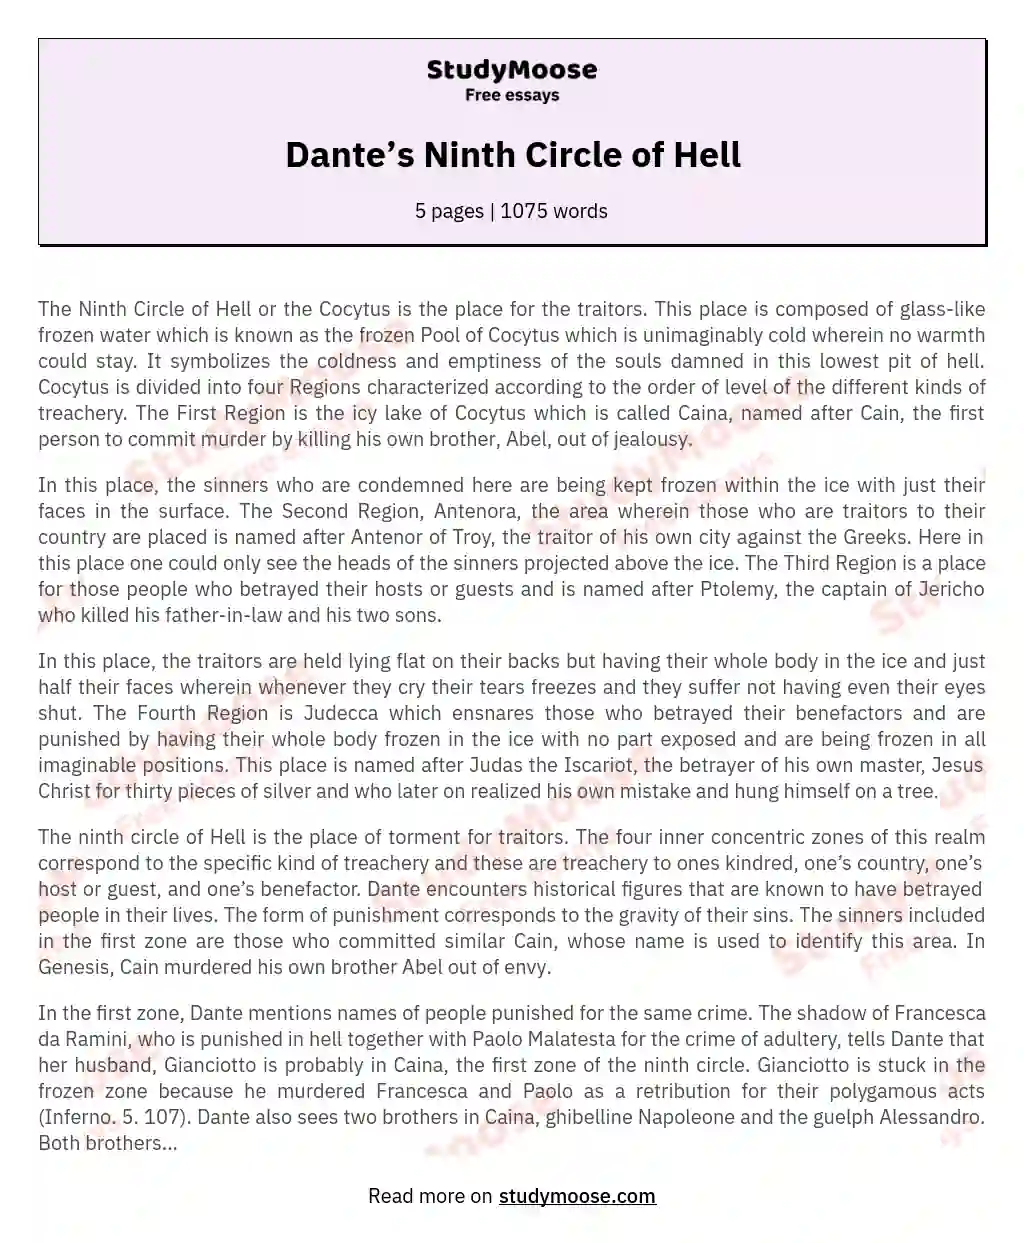 Dante’s Ninth Circle of Hell essay